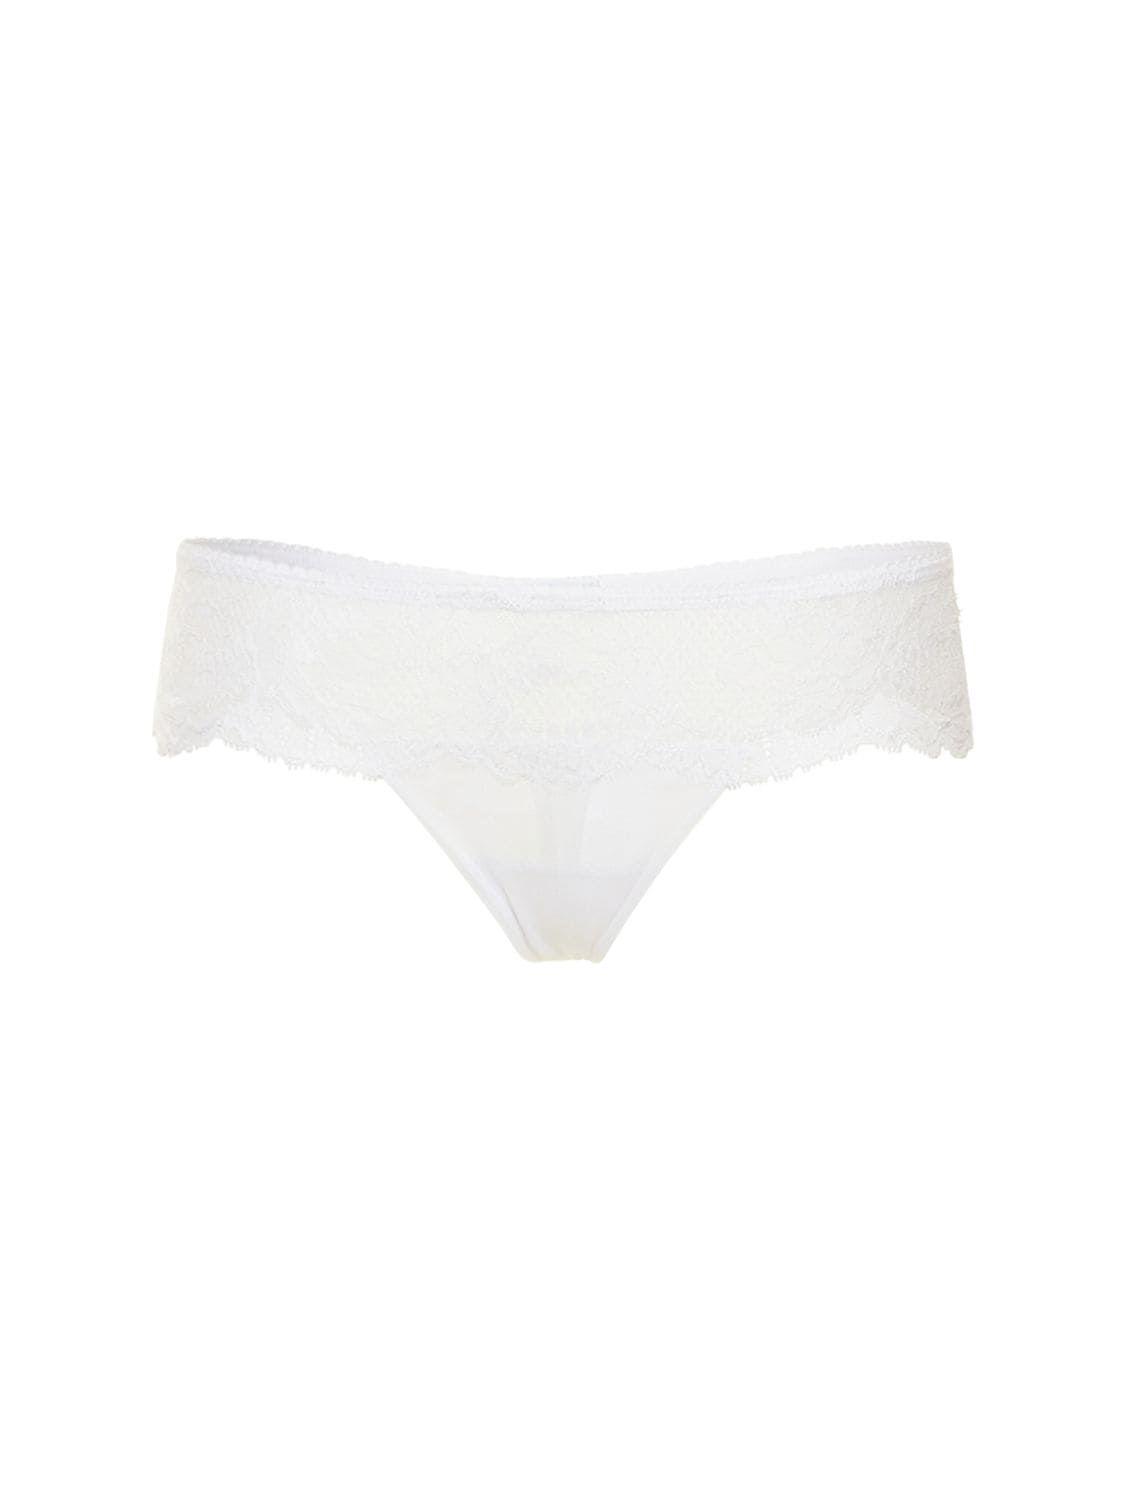 La Perla Brigitta Lace G-string Thong in White | Lyst